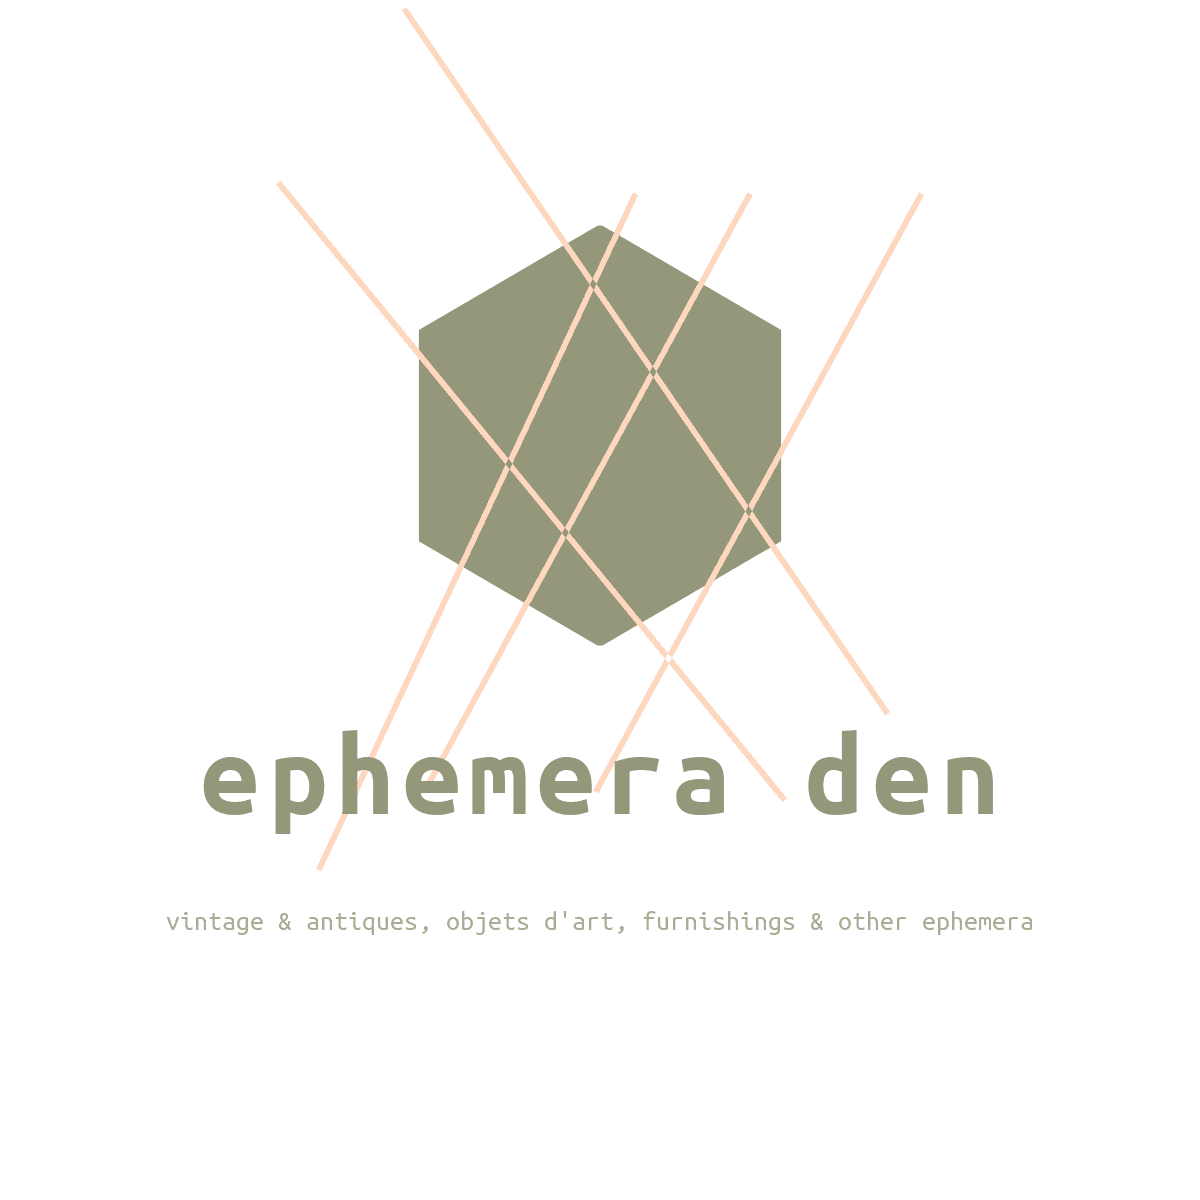 Ephemera Den